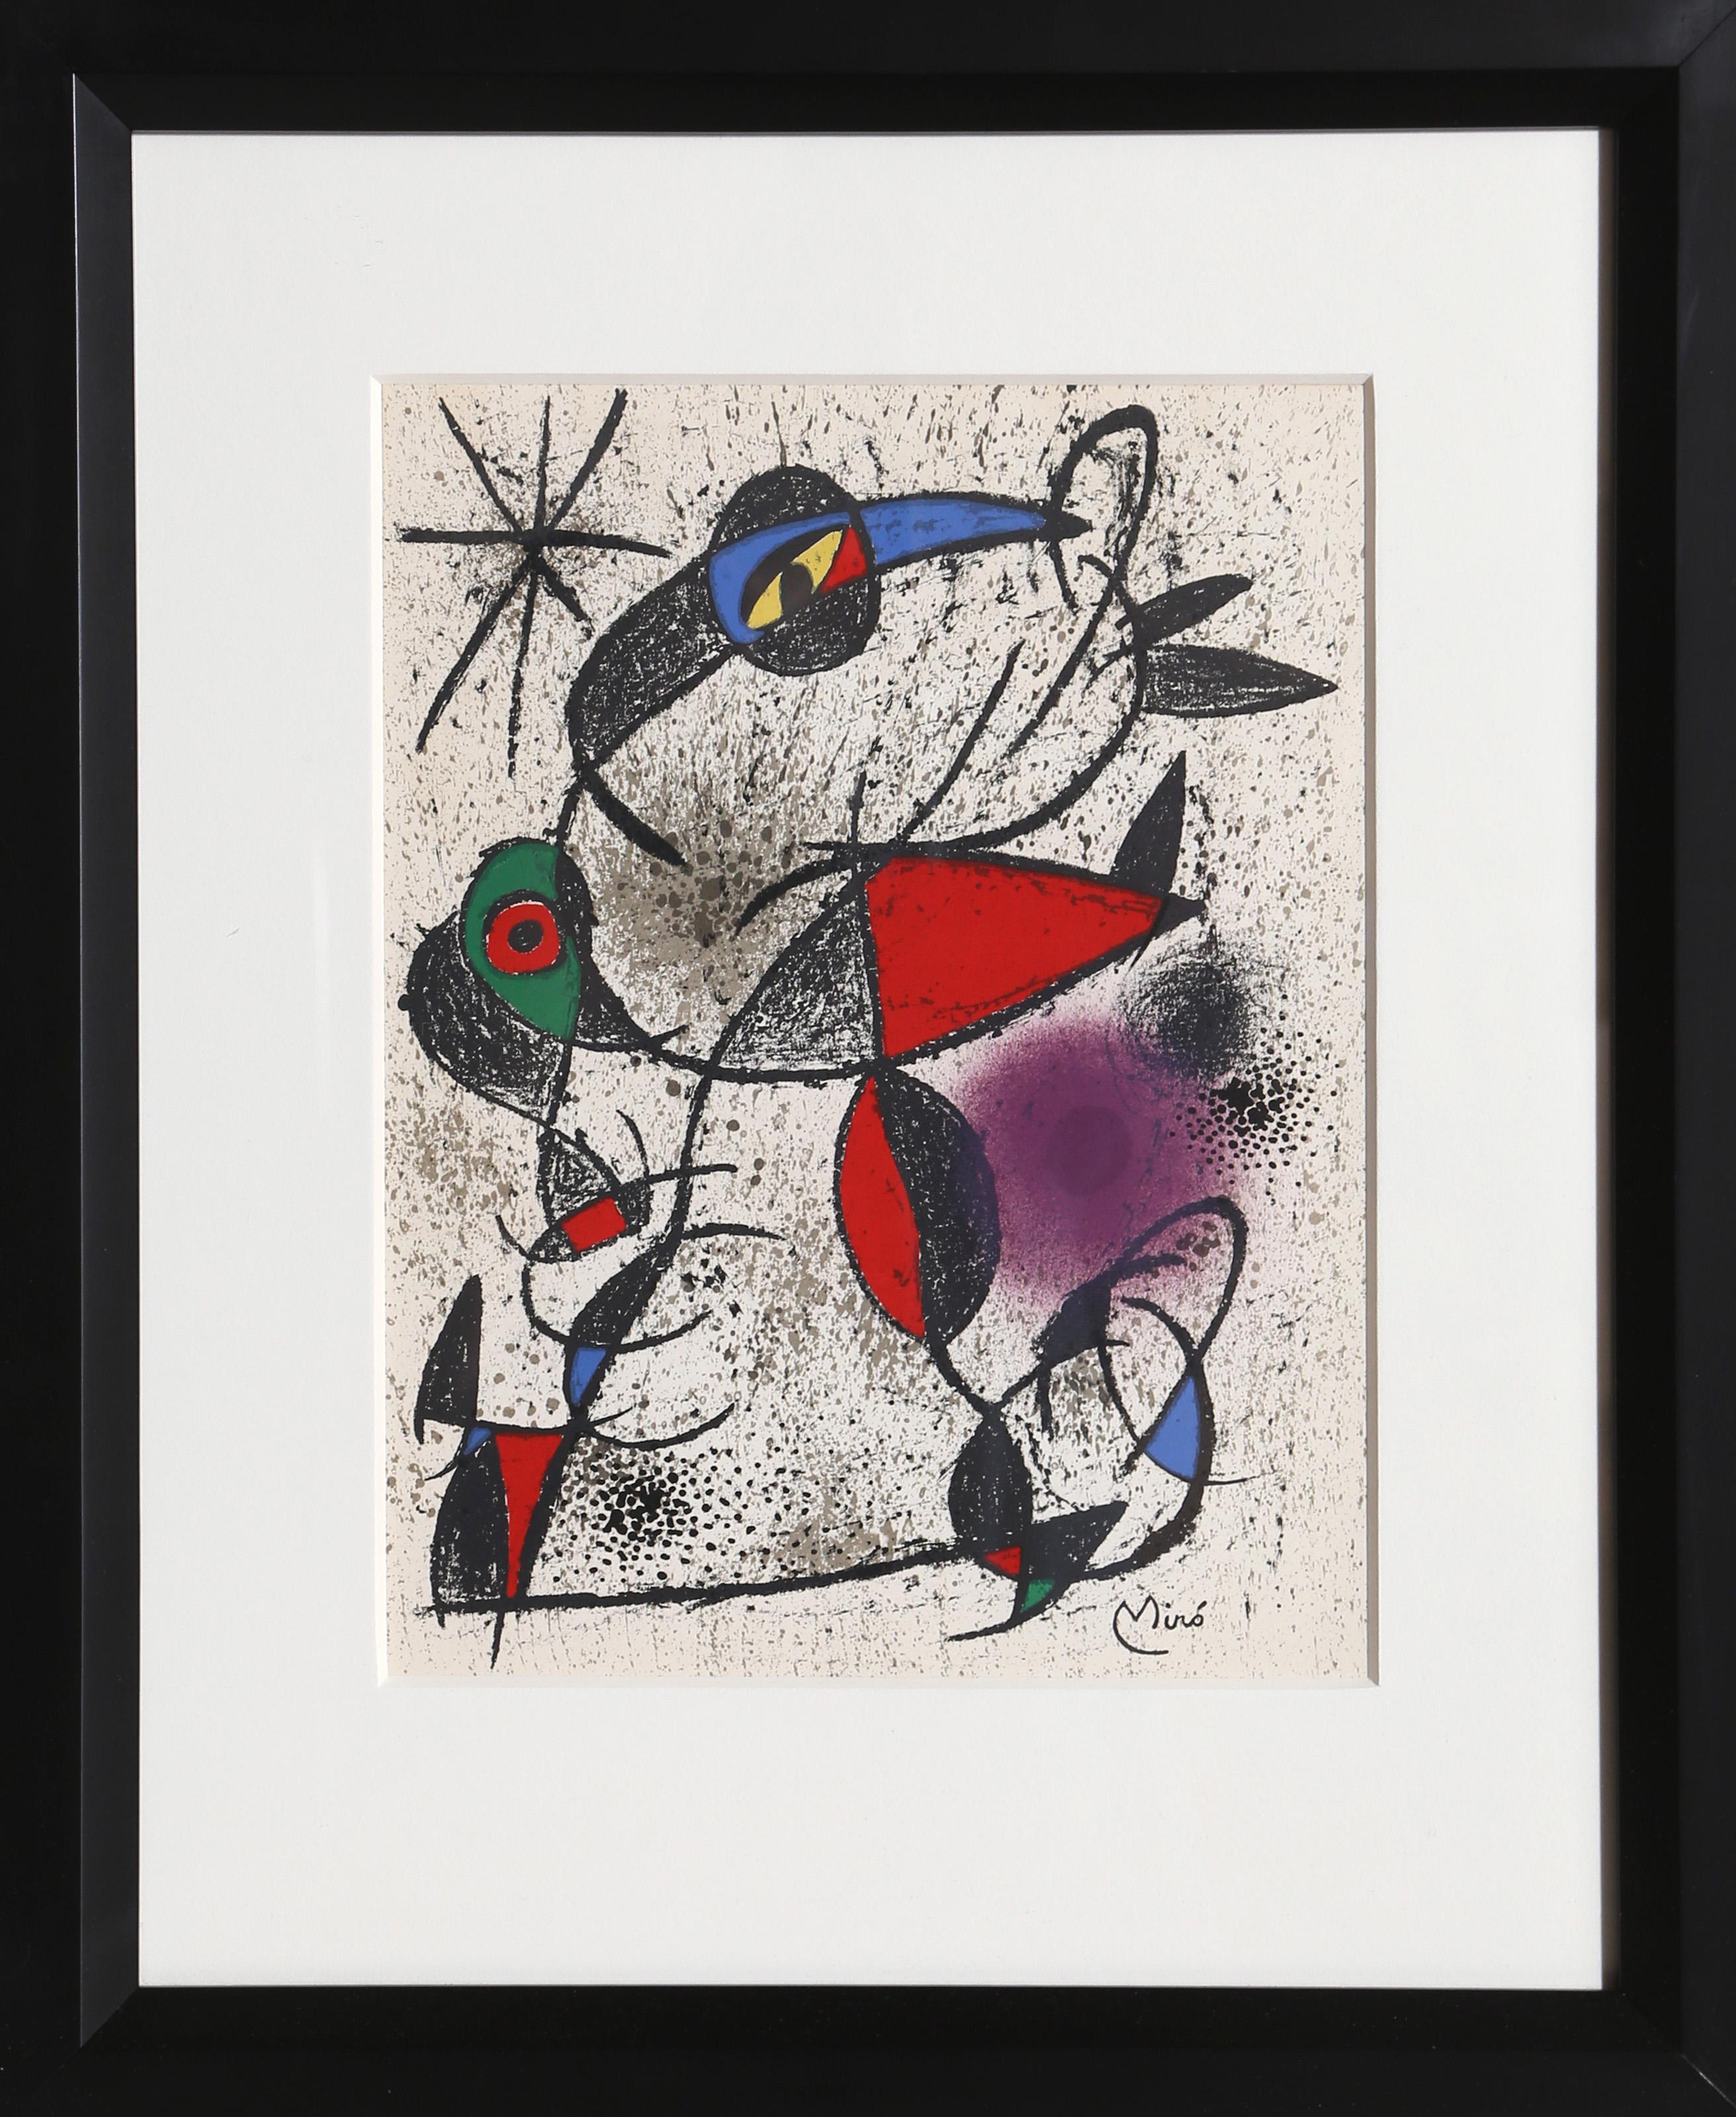 Joan Miró Abstract Print - Jaillie du Calcaire from Souvenirs de Portraits d'Artistes by Joan Miro